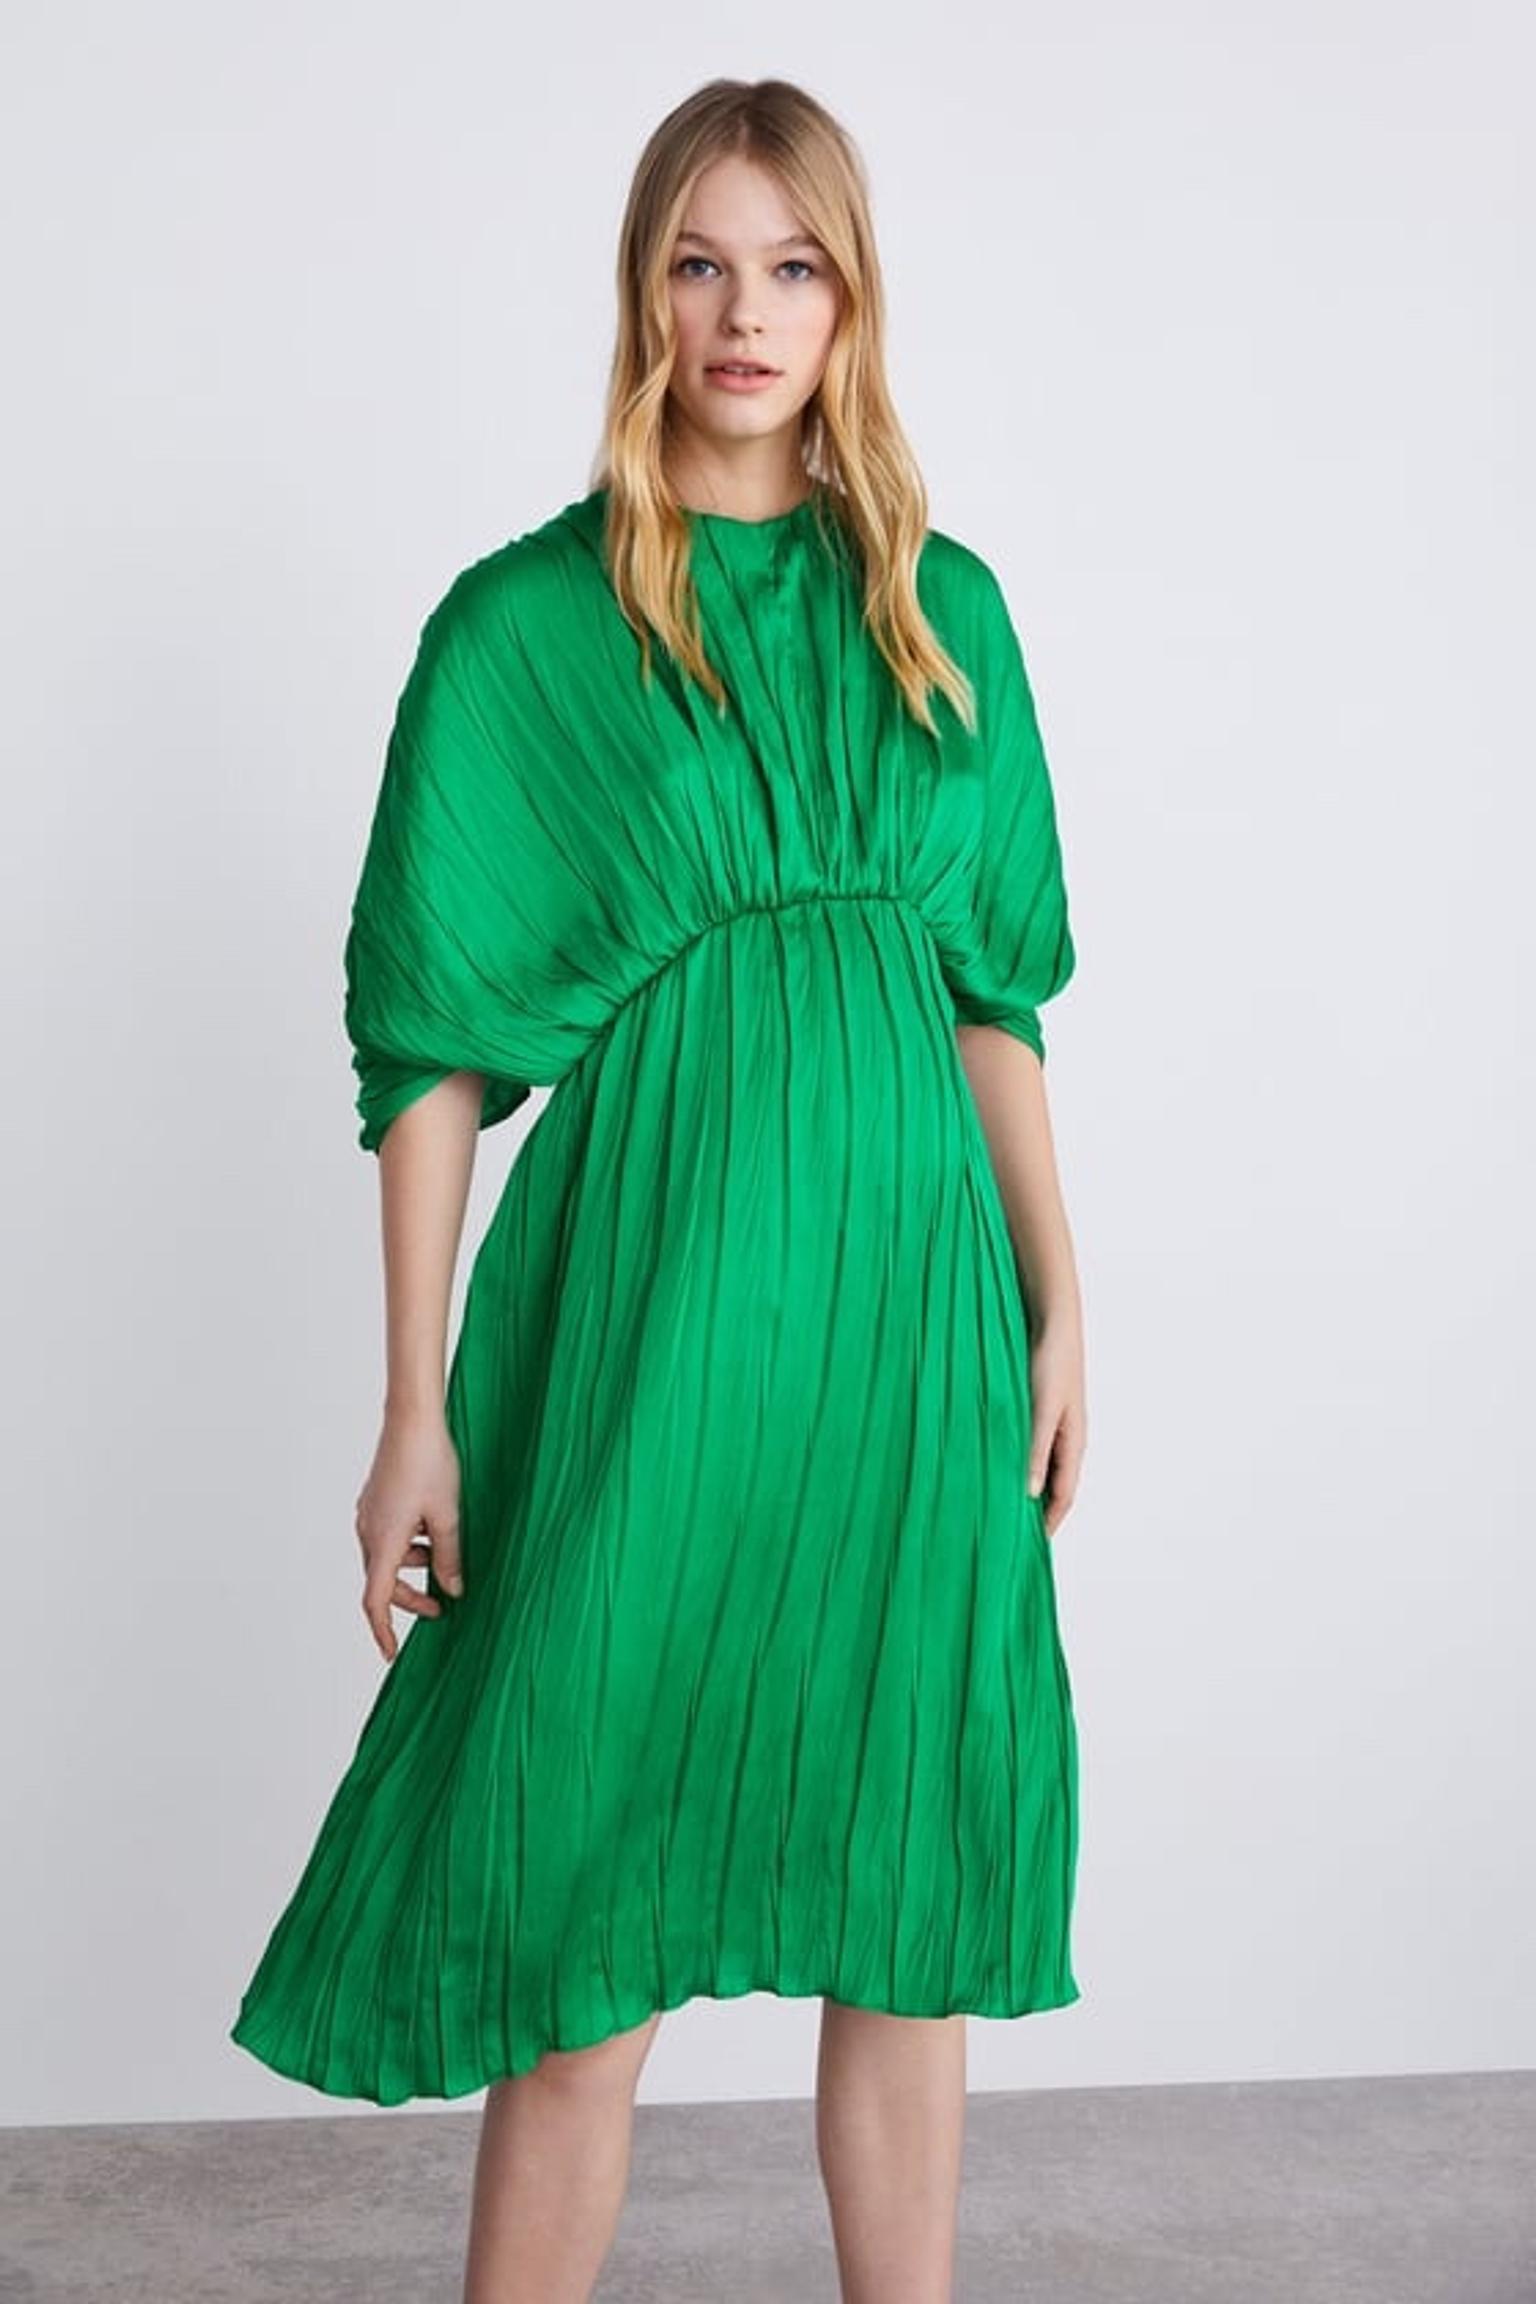 green dress from zara